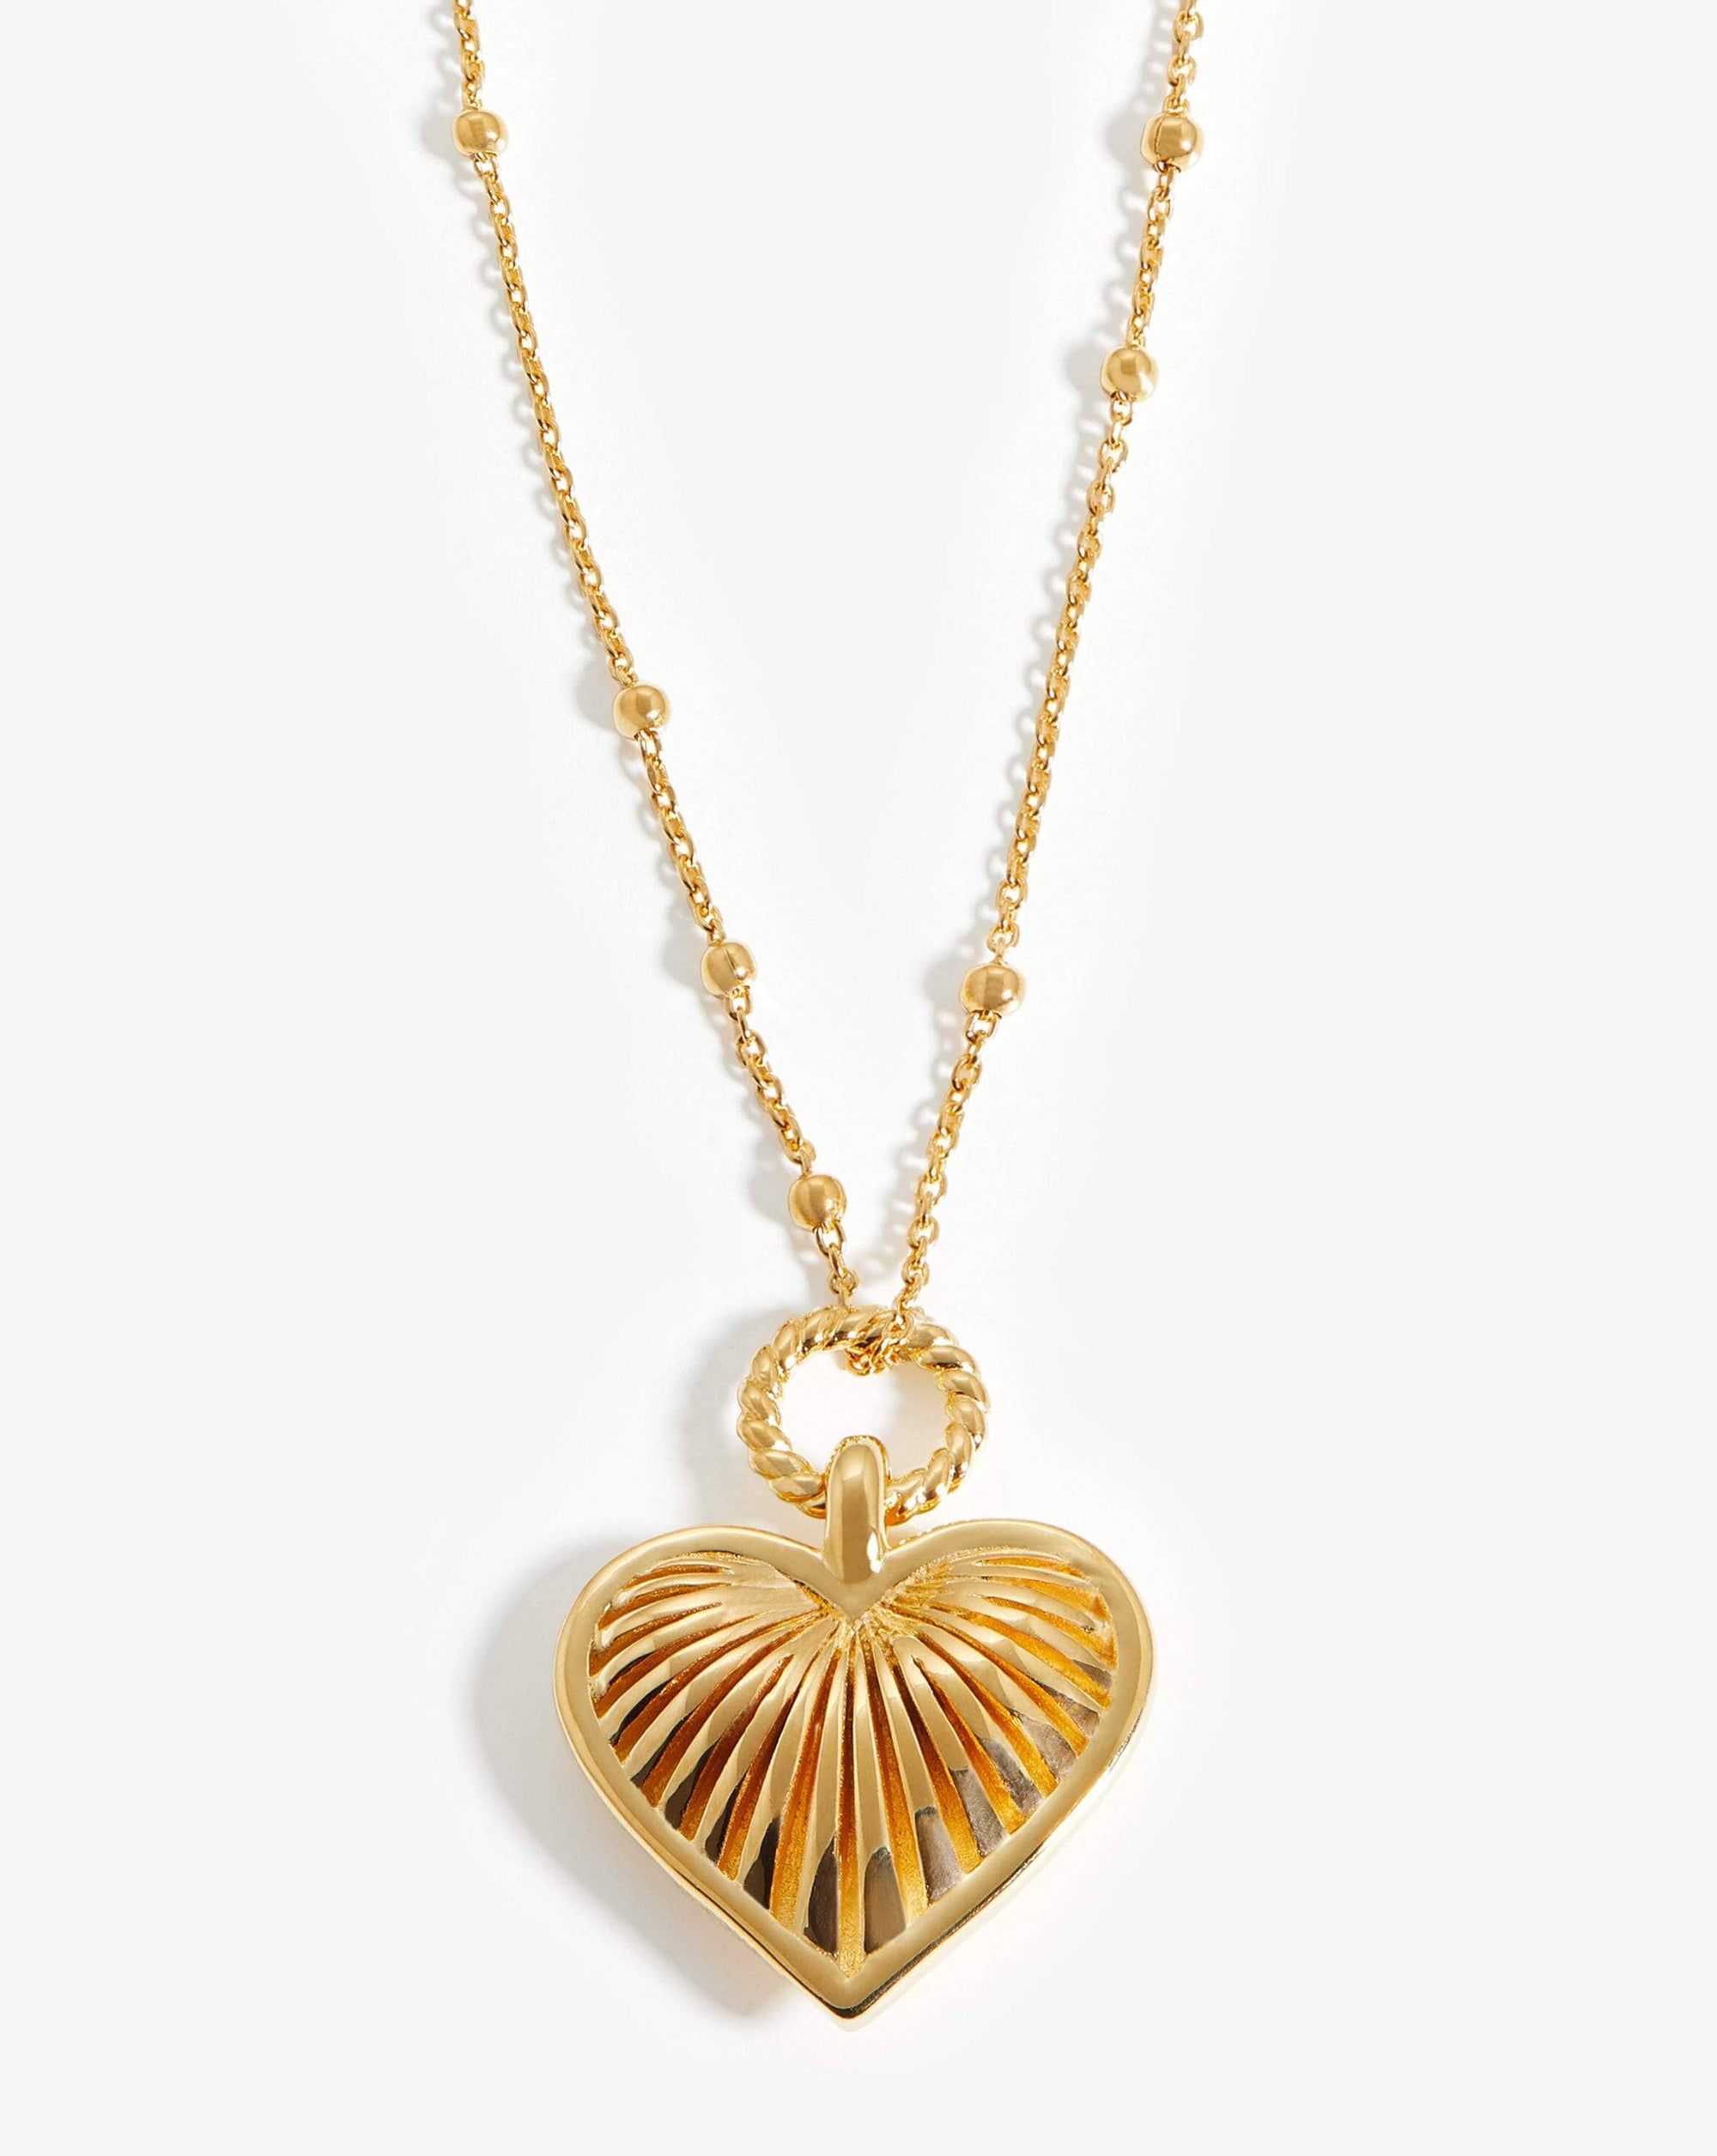 Barbie's Heart Necklace | eBay